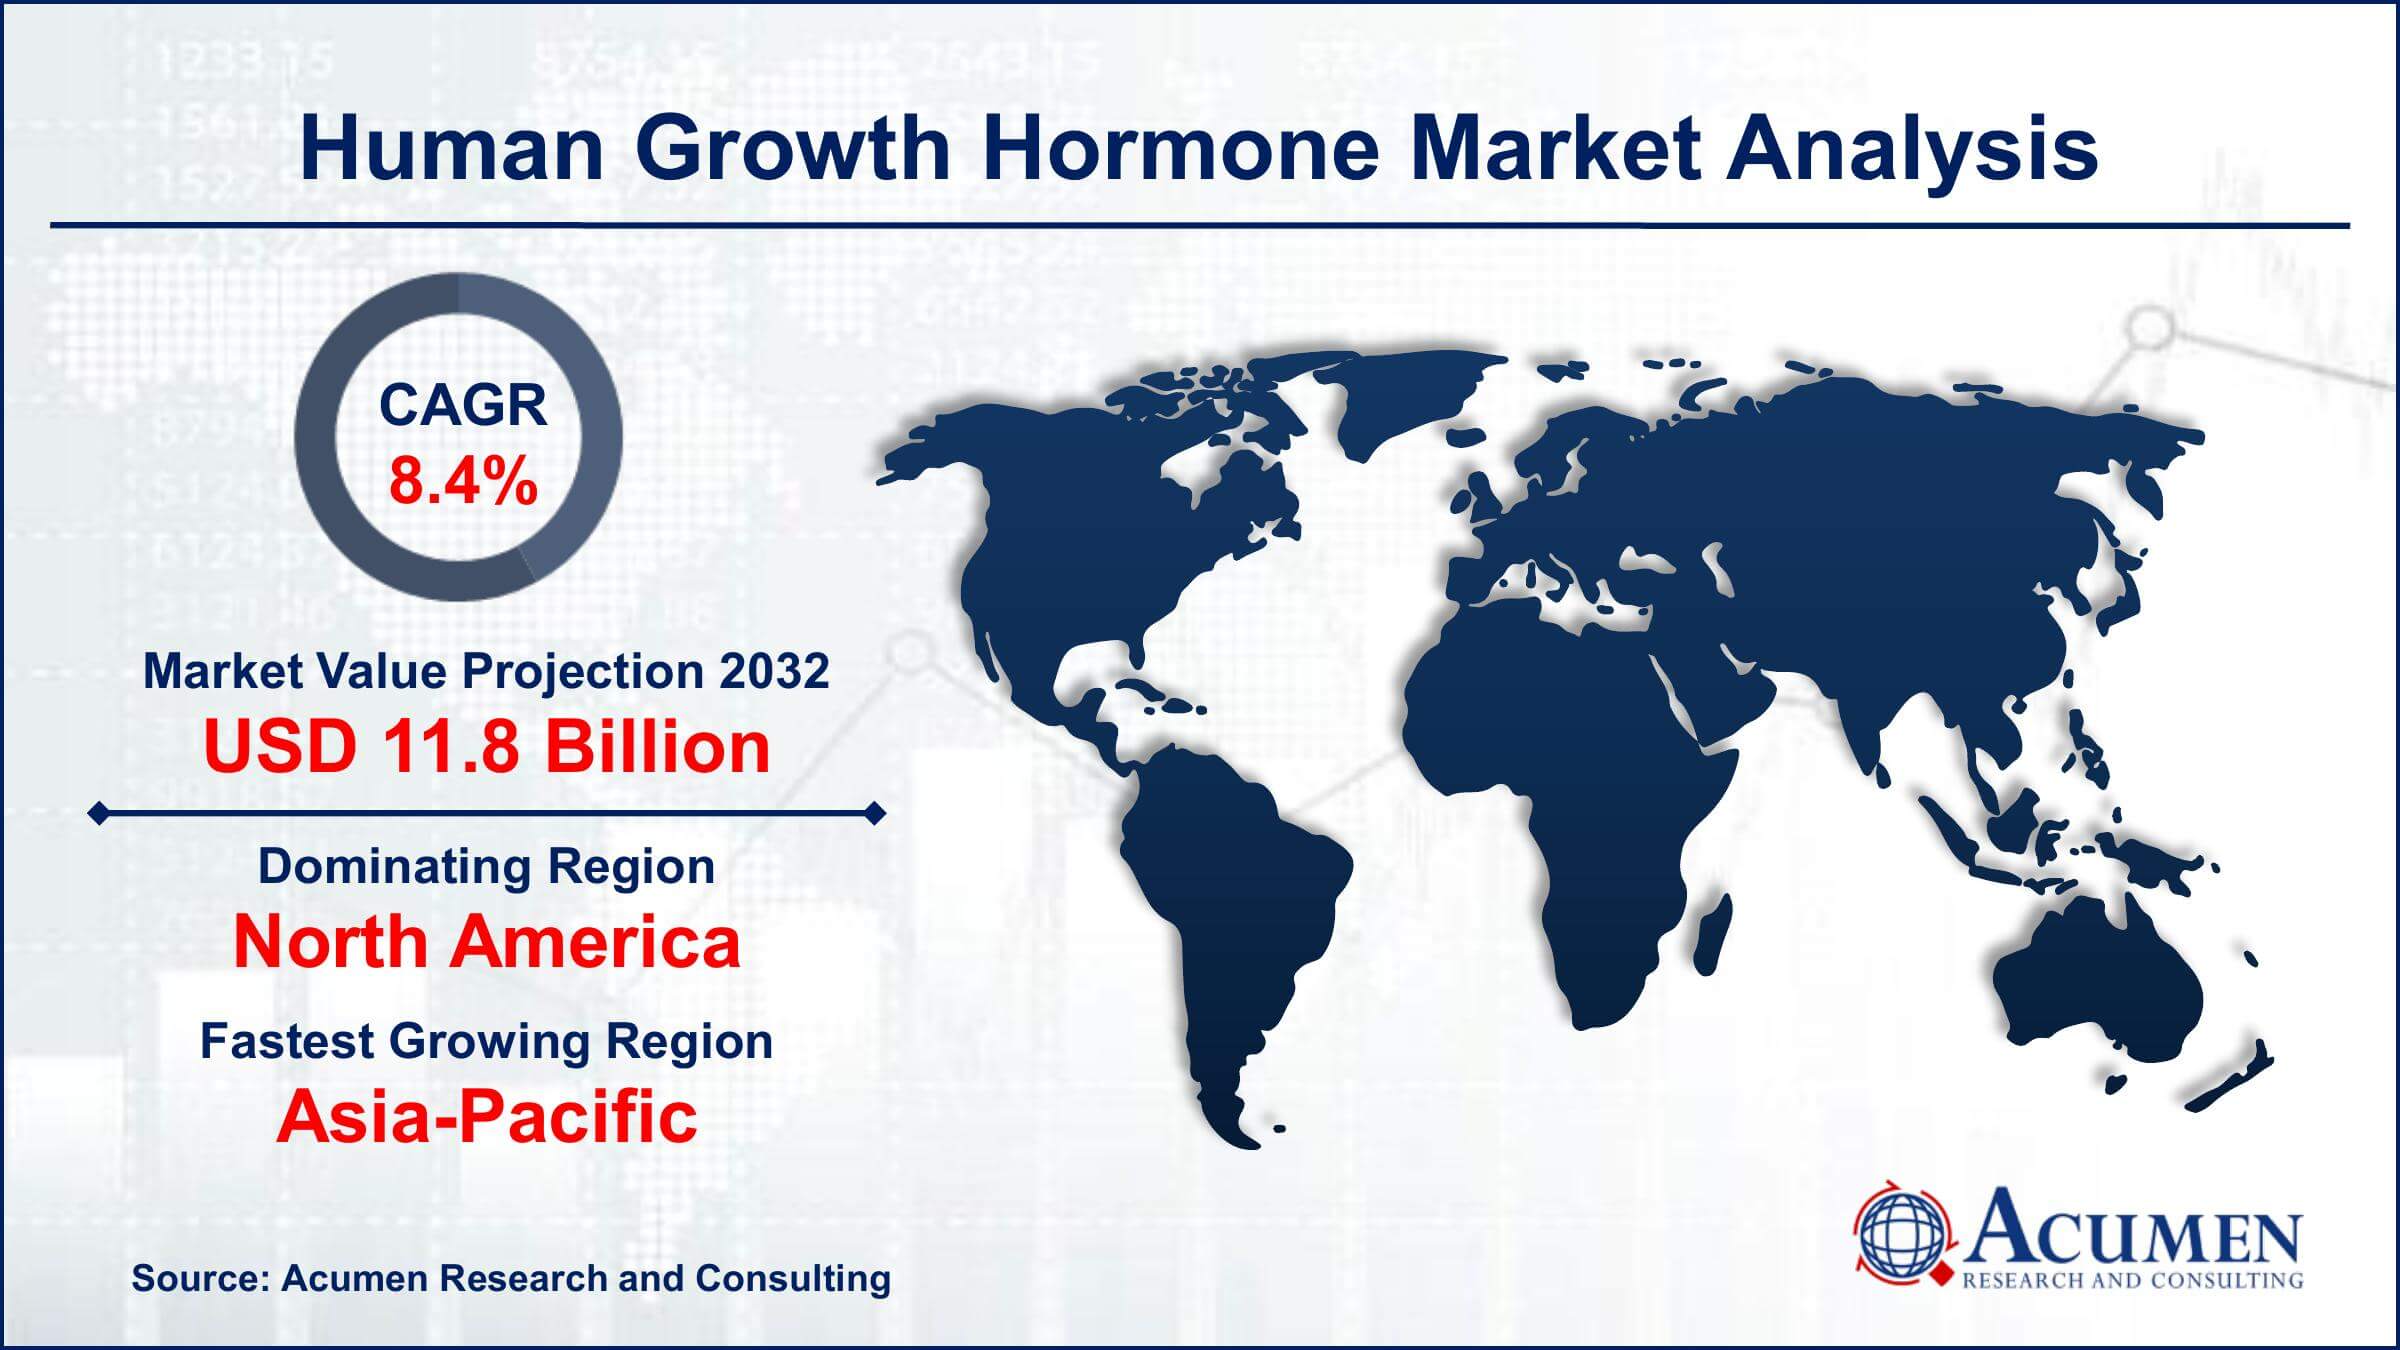 Human Growth Hormone Market Trends